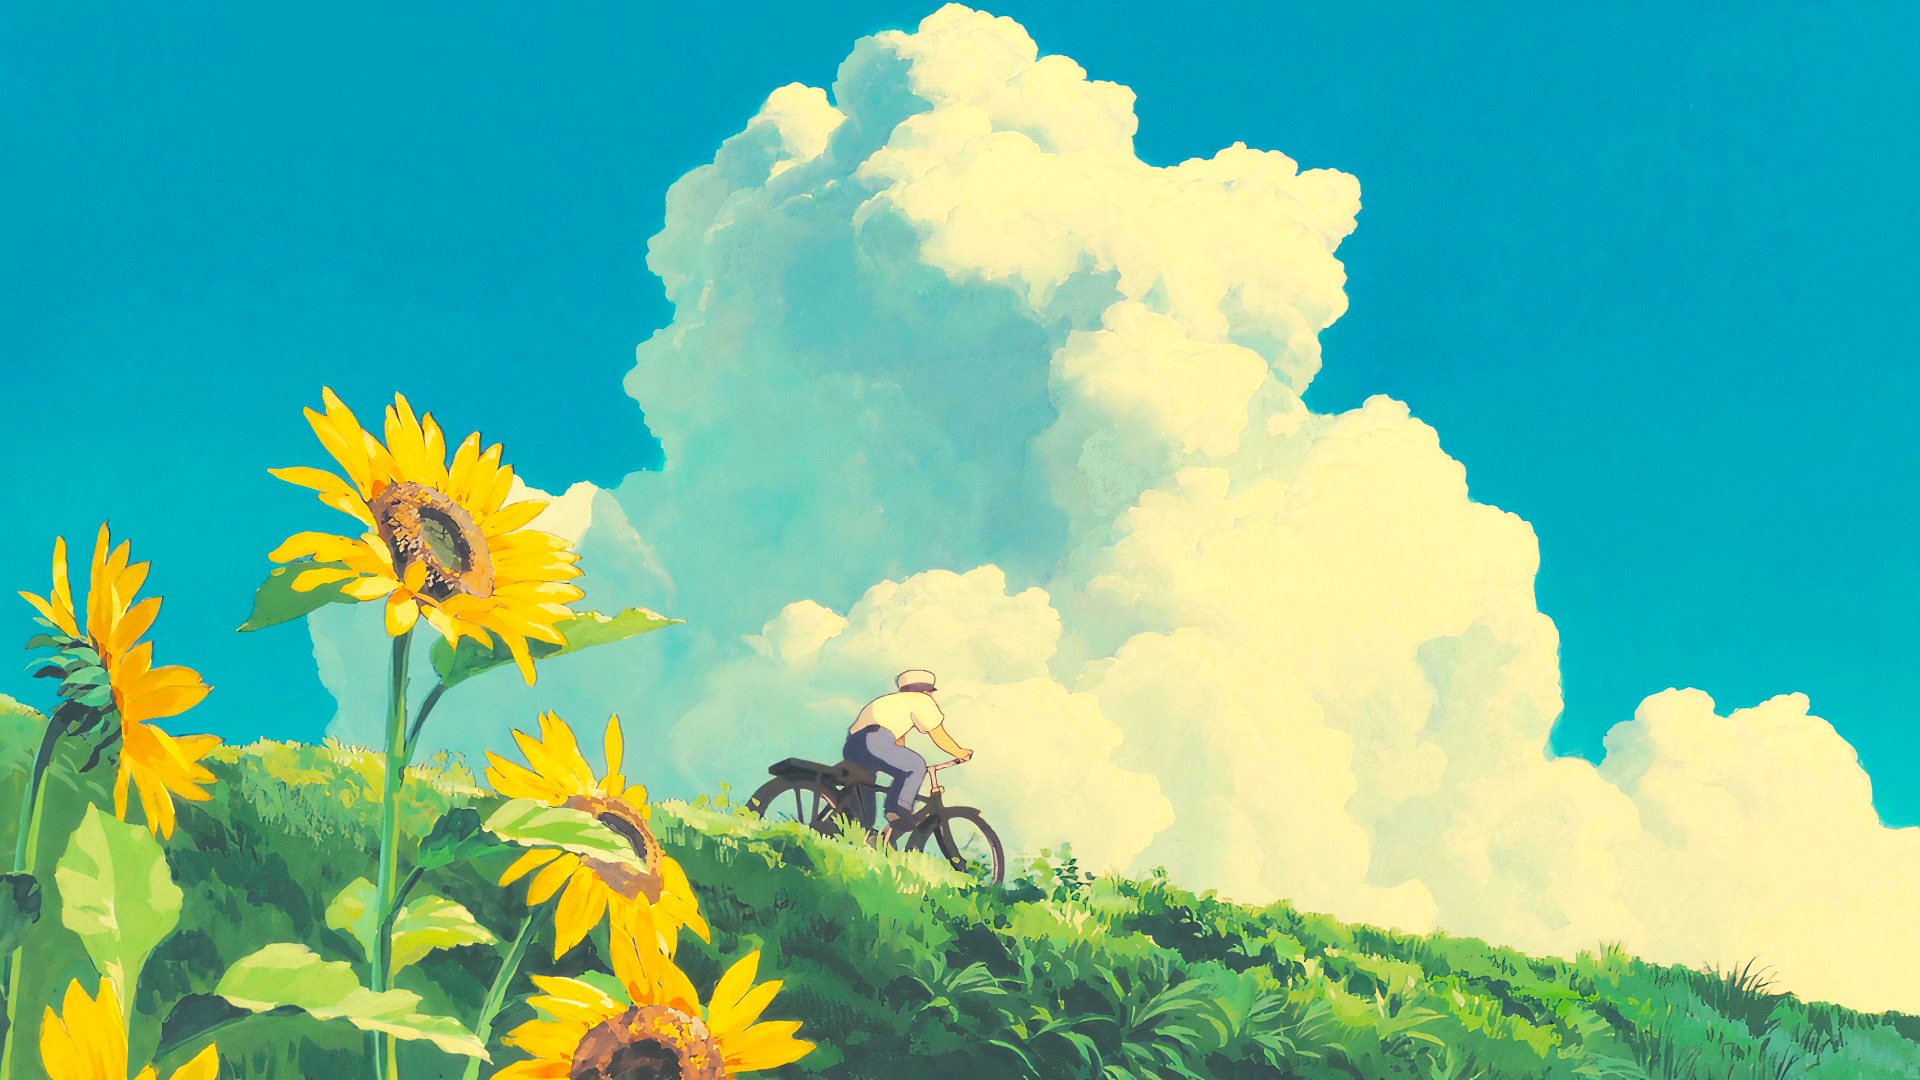 Artwork Anime Clouds Grass Sunflowers Sky Cycling 1920x1080